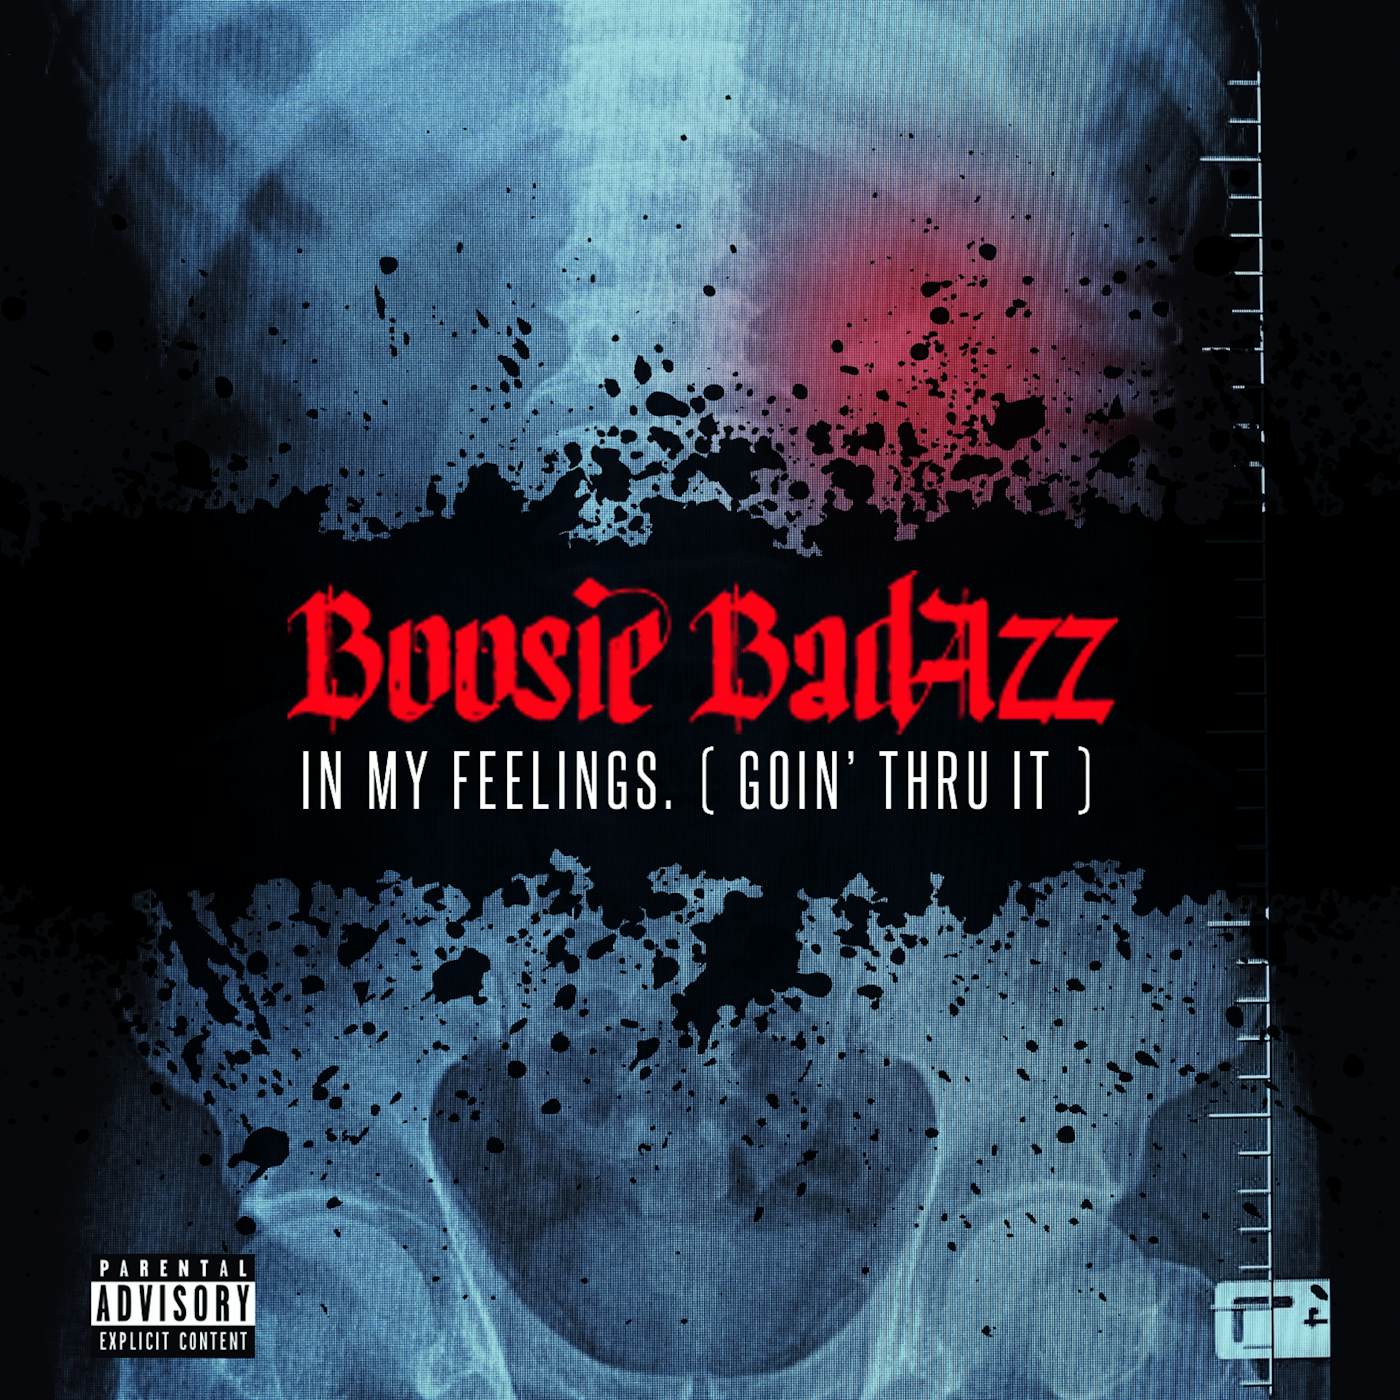 Boosie Badazz IN MY FEELINGS (GOIN' THRU IT) CD